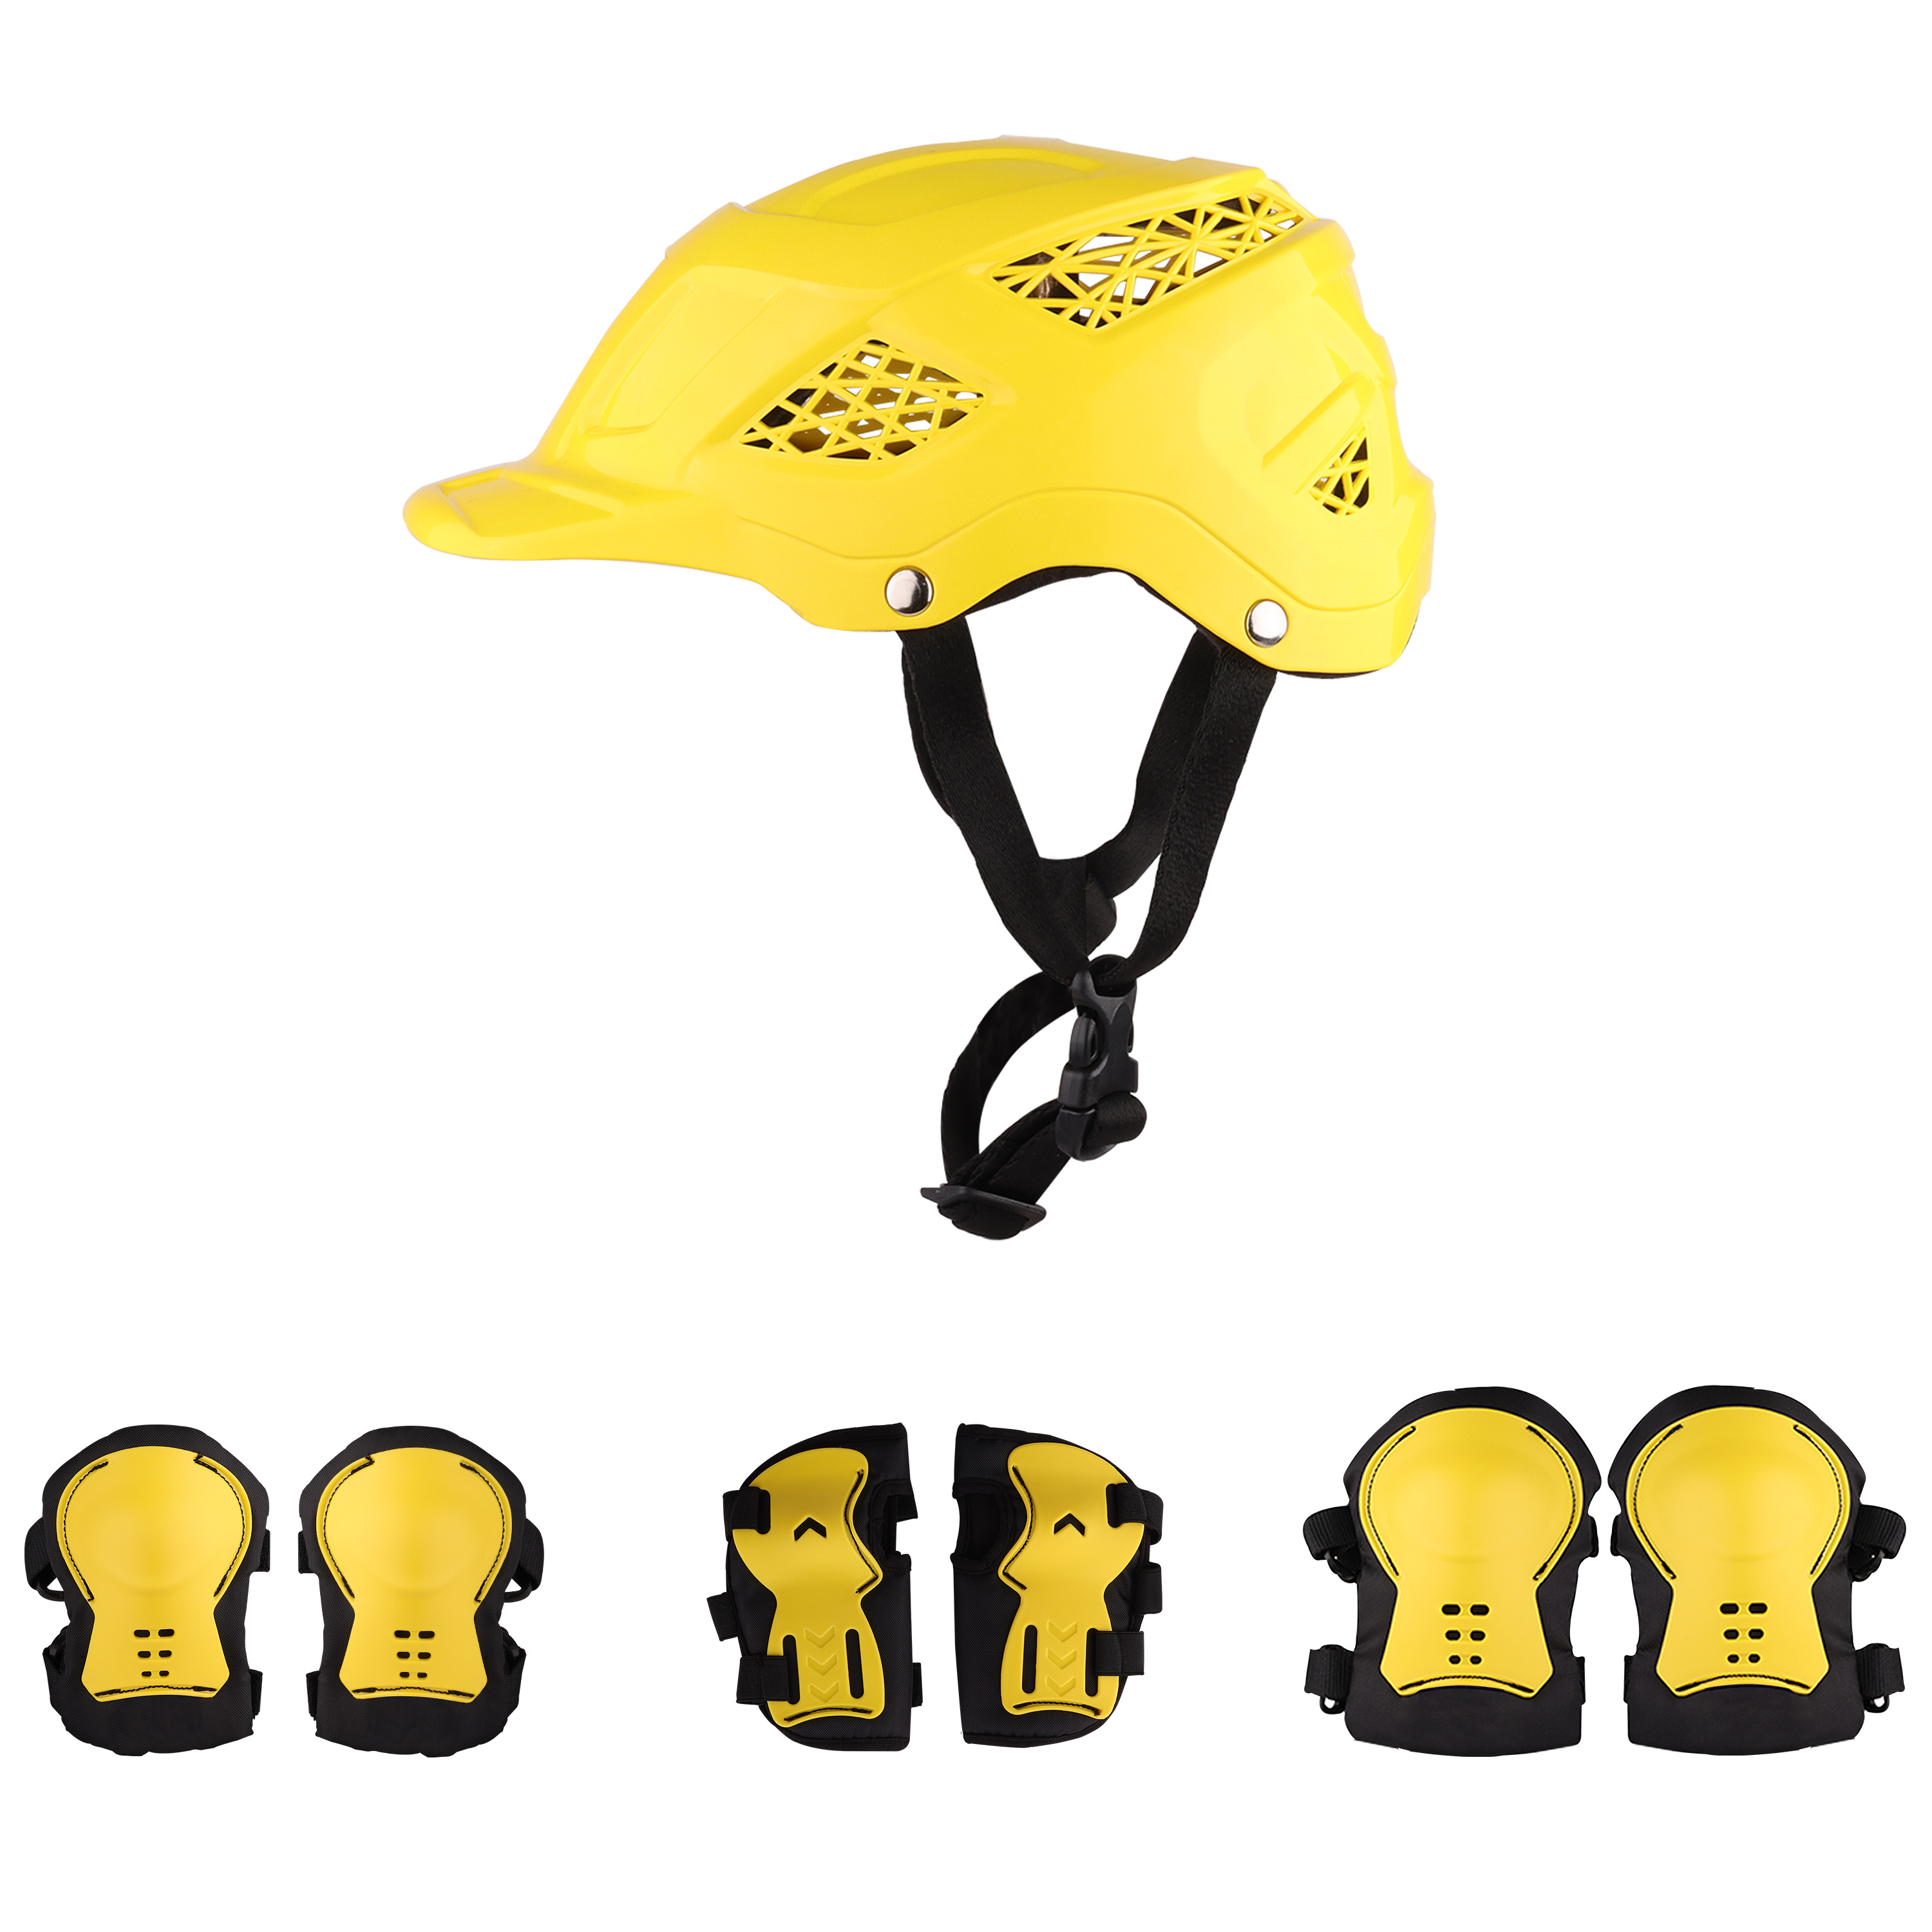 Skating / Cycling Helmet along with Protector - Yellow